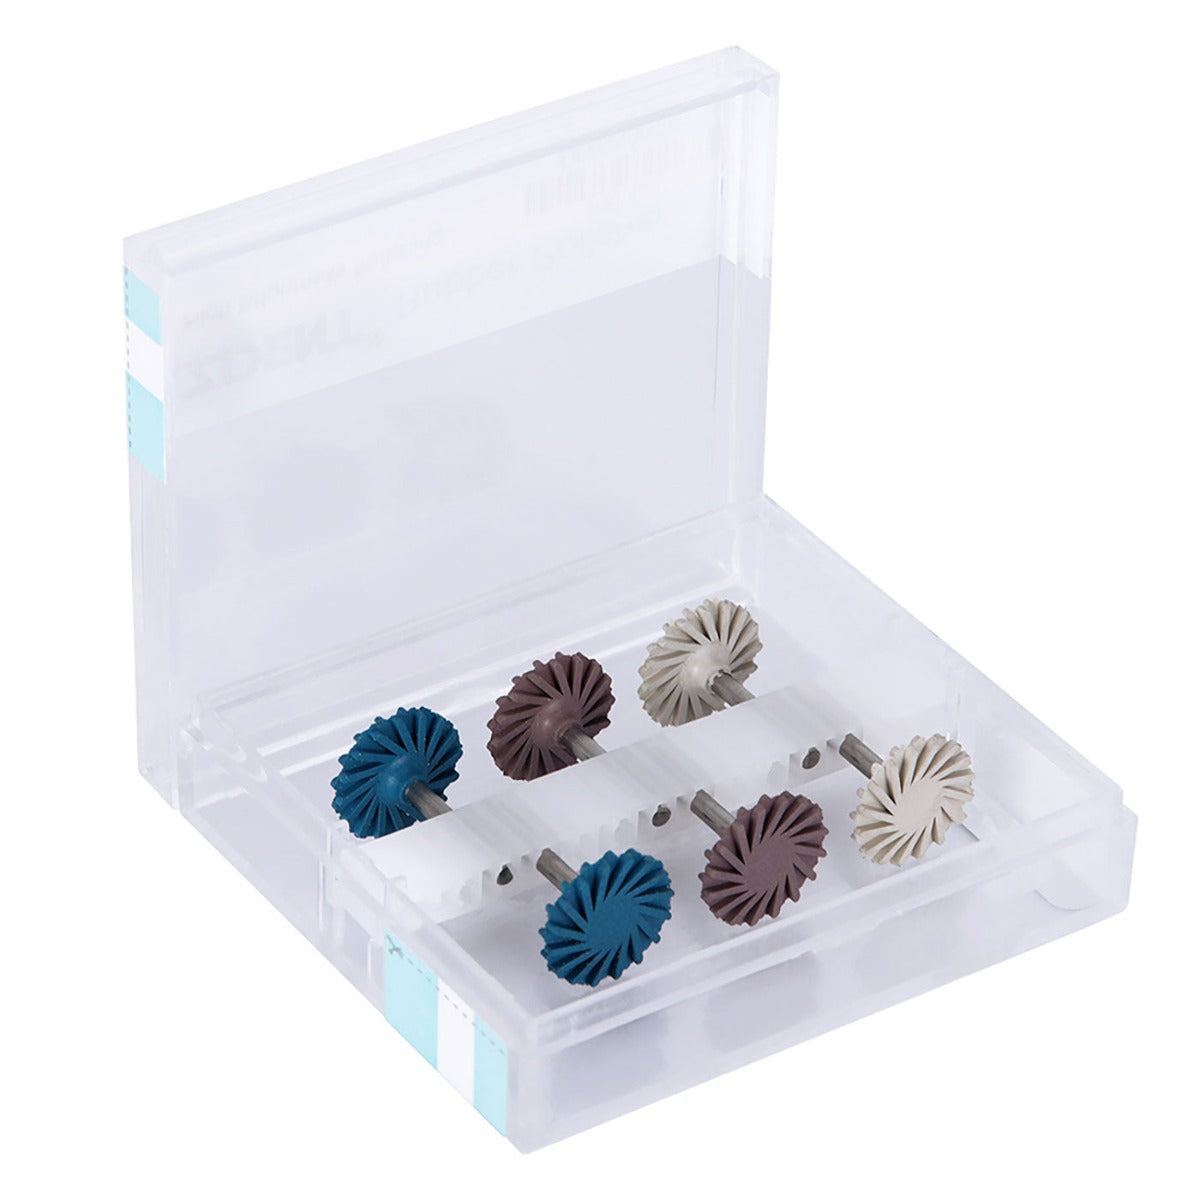 Dental Polishing Kit Composite Ceramic Zircon Rubber Wheel 6pcs/Kit - pairaydental.com